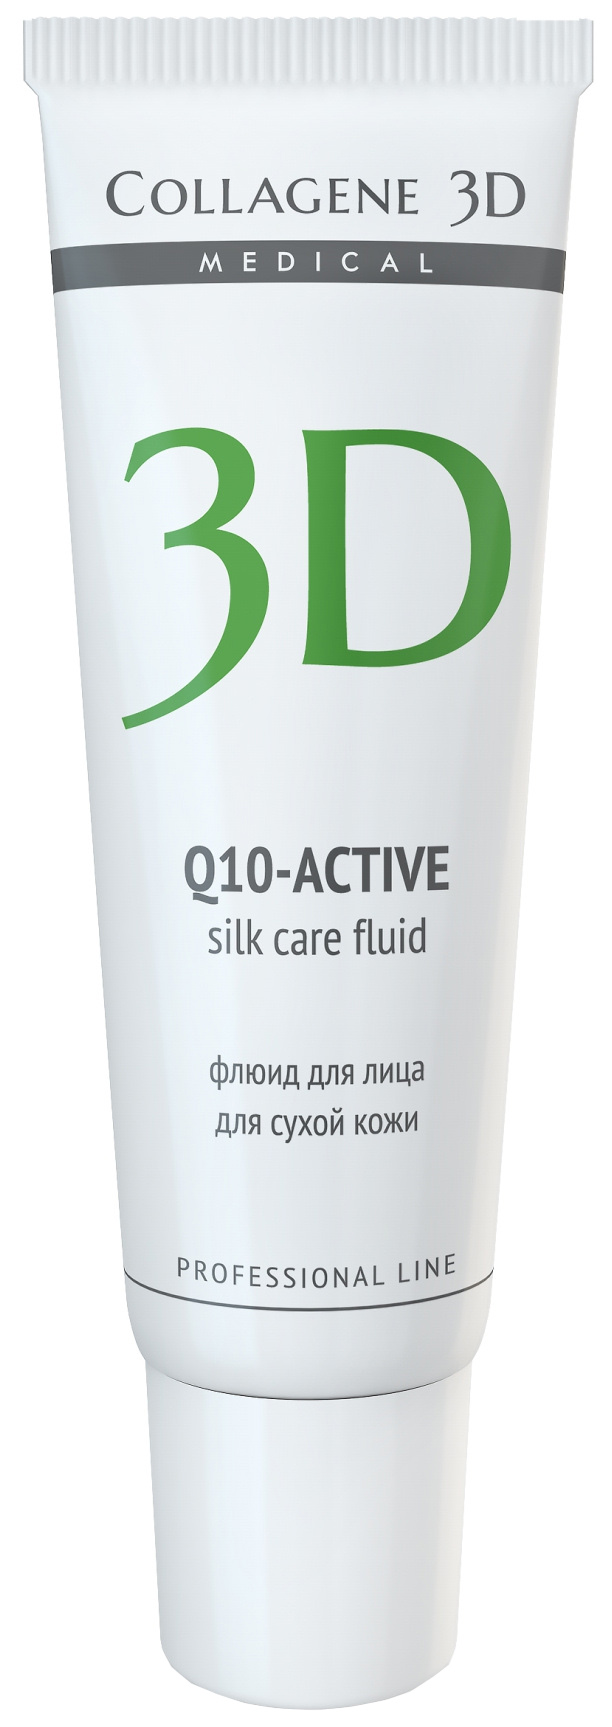 фото Флюид-эксперт для лица medical collagene 3d proff q10-active silk care, 30 мл